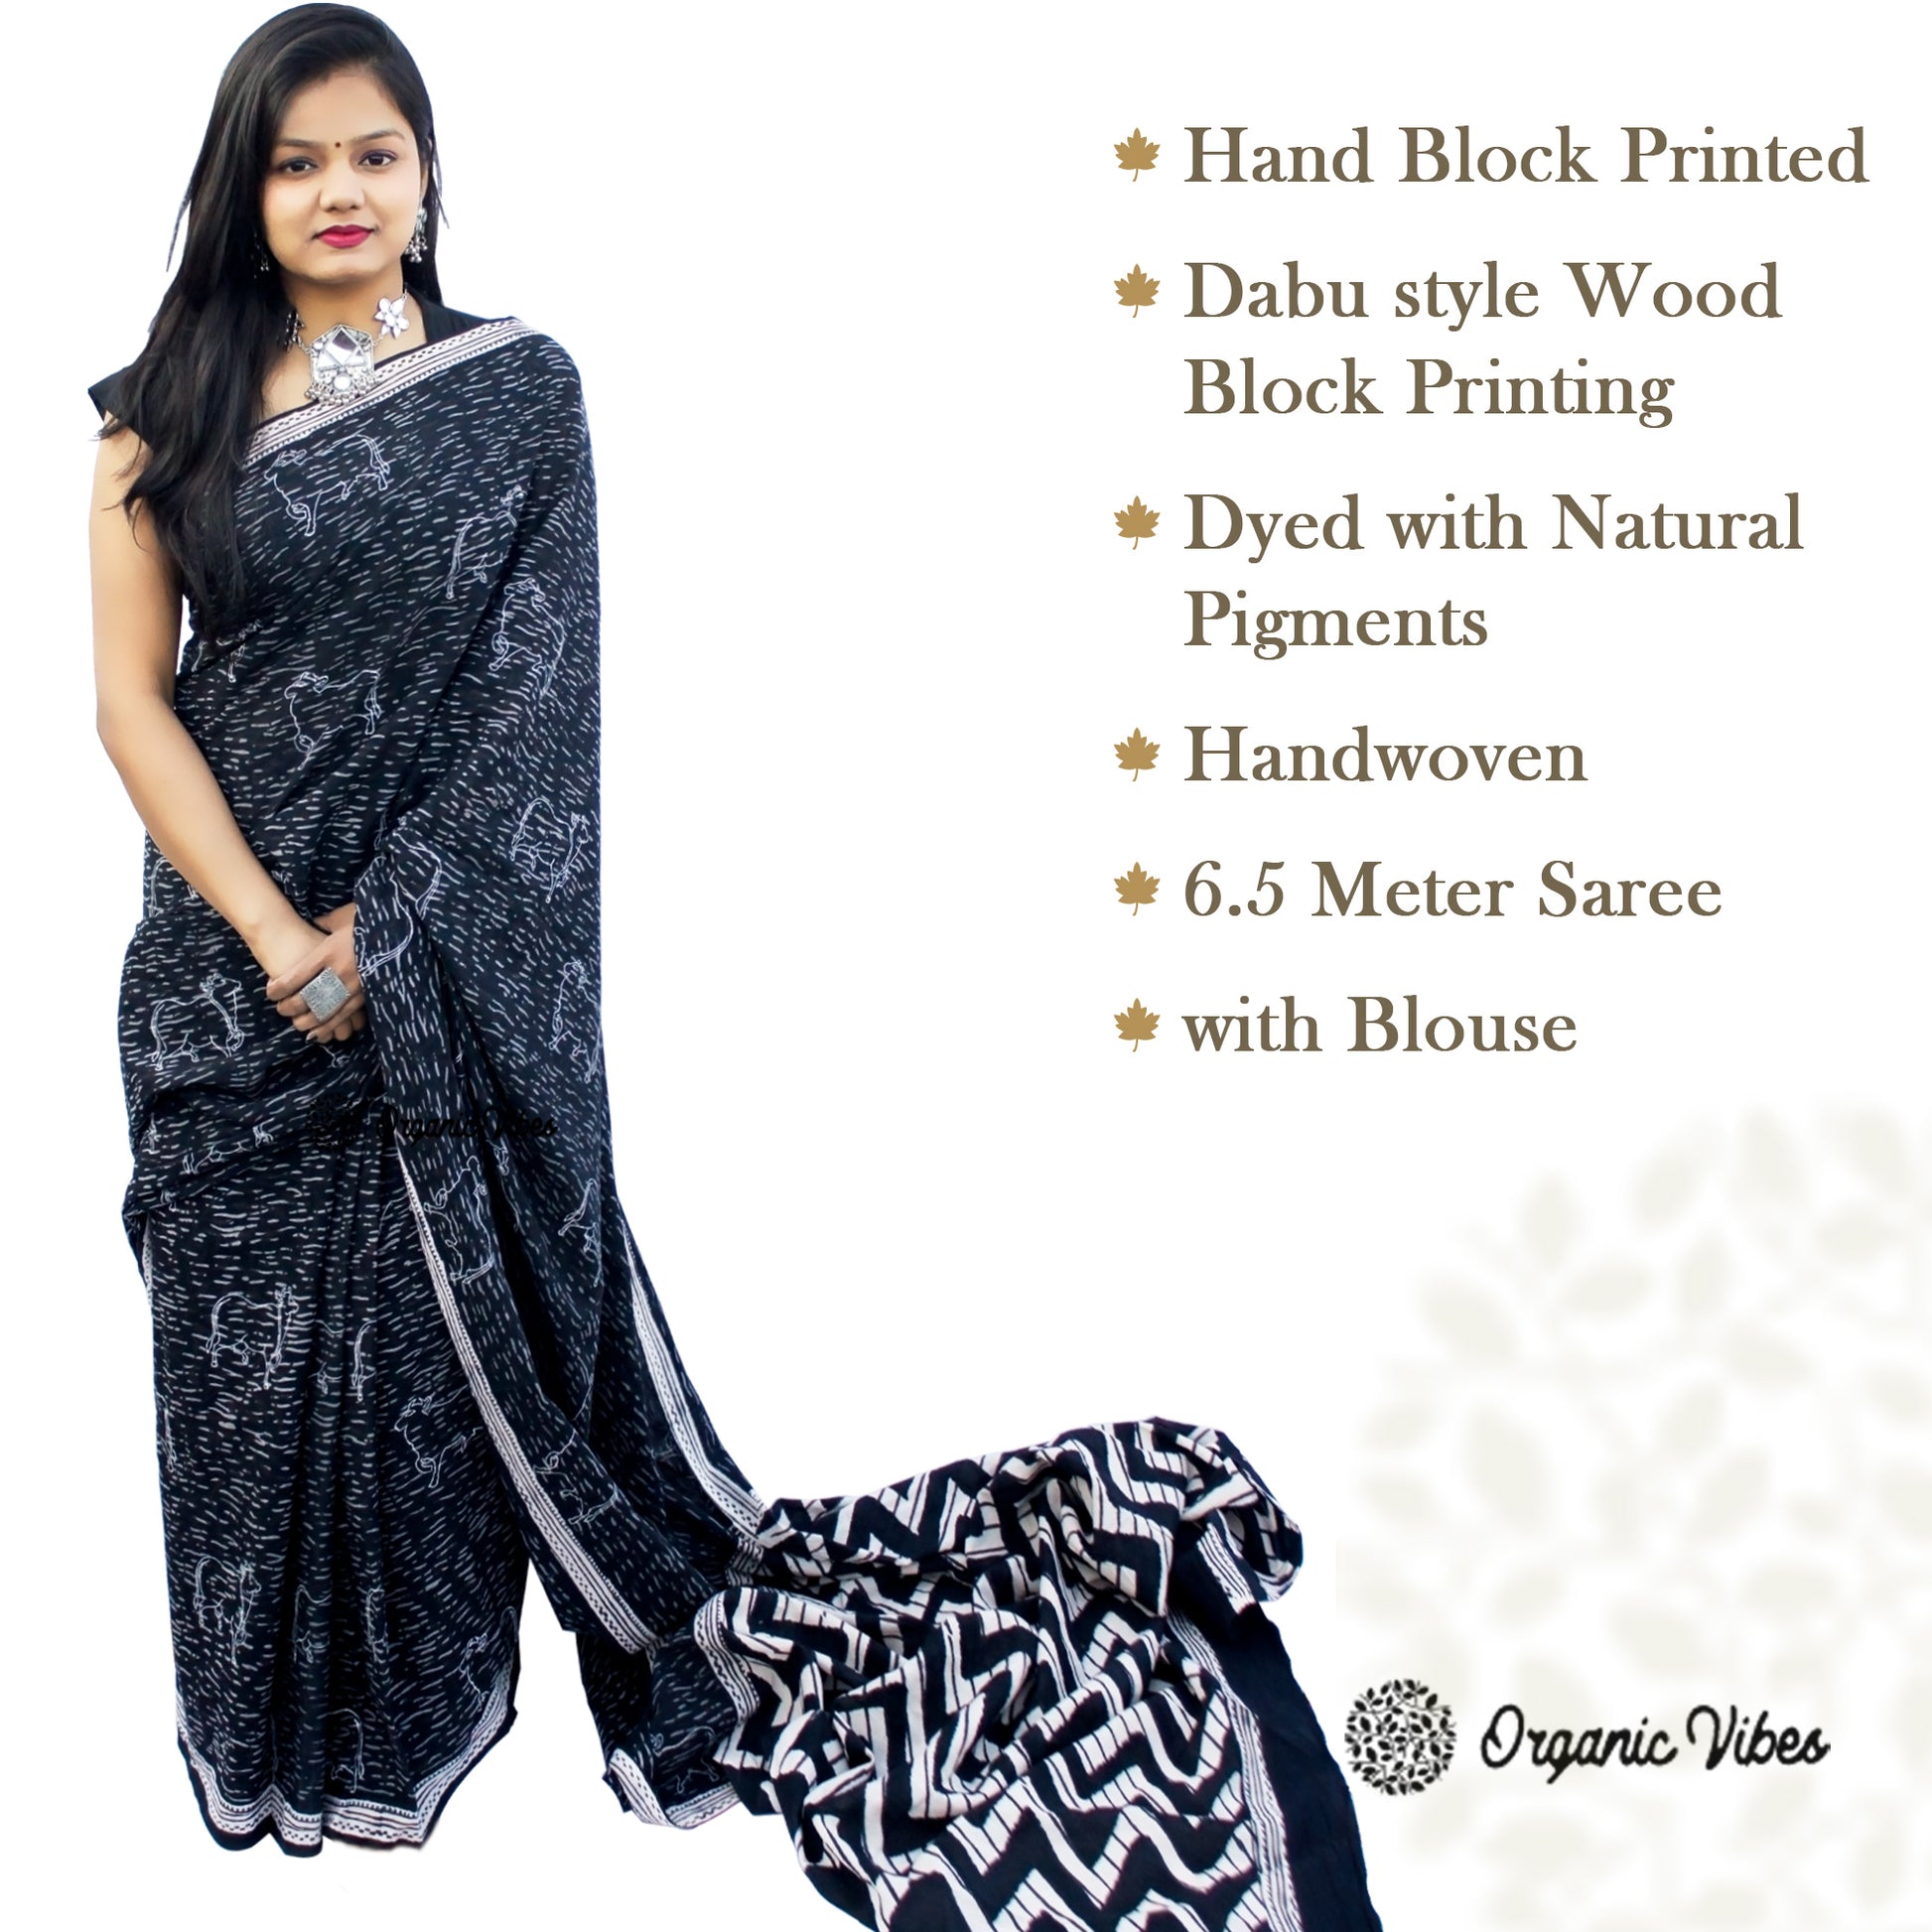 Organic Vibes Black Handblock Printed Nandi Prints Mulmul Cotton Saree For Women